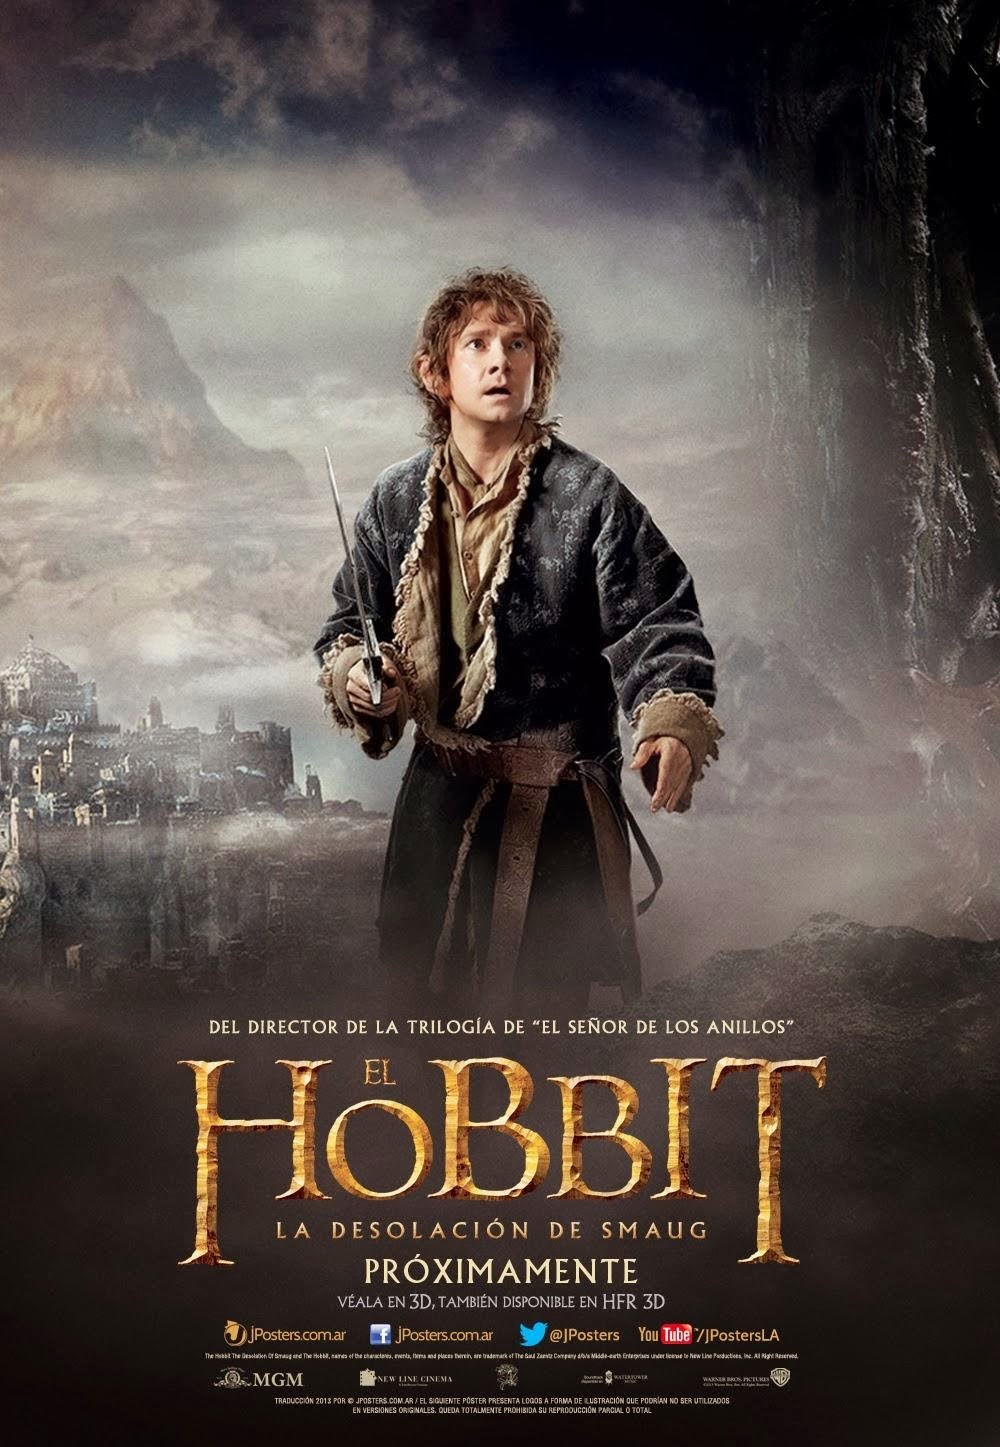 The Hobbit 2: The Desolation of Smaug BluRay 720p + Subtitle Indonesia